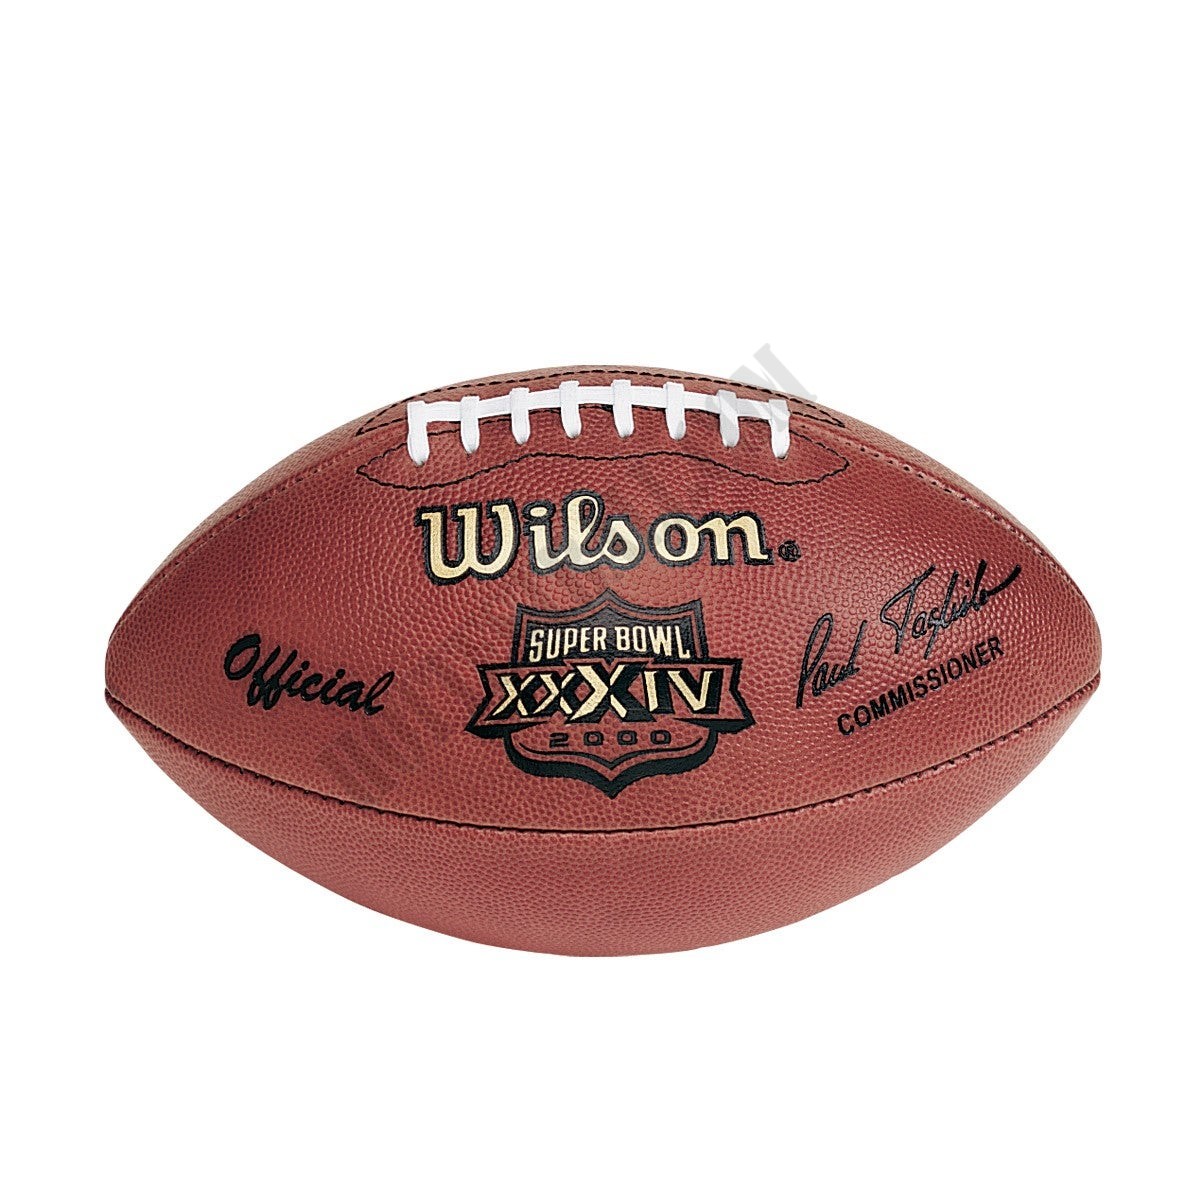 Super Bowl XXXIV Game Football - St. Louis Rams ● Wilson Promotions - Super Bowl XXXIV Game Football - St. Louis Rams ● Wilson Promotions